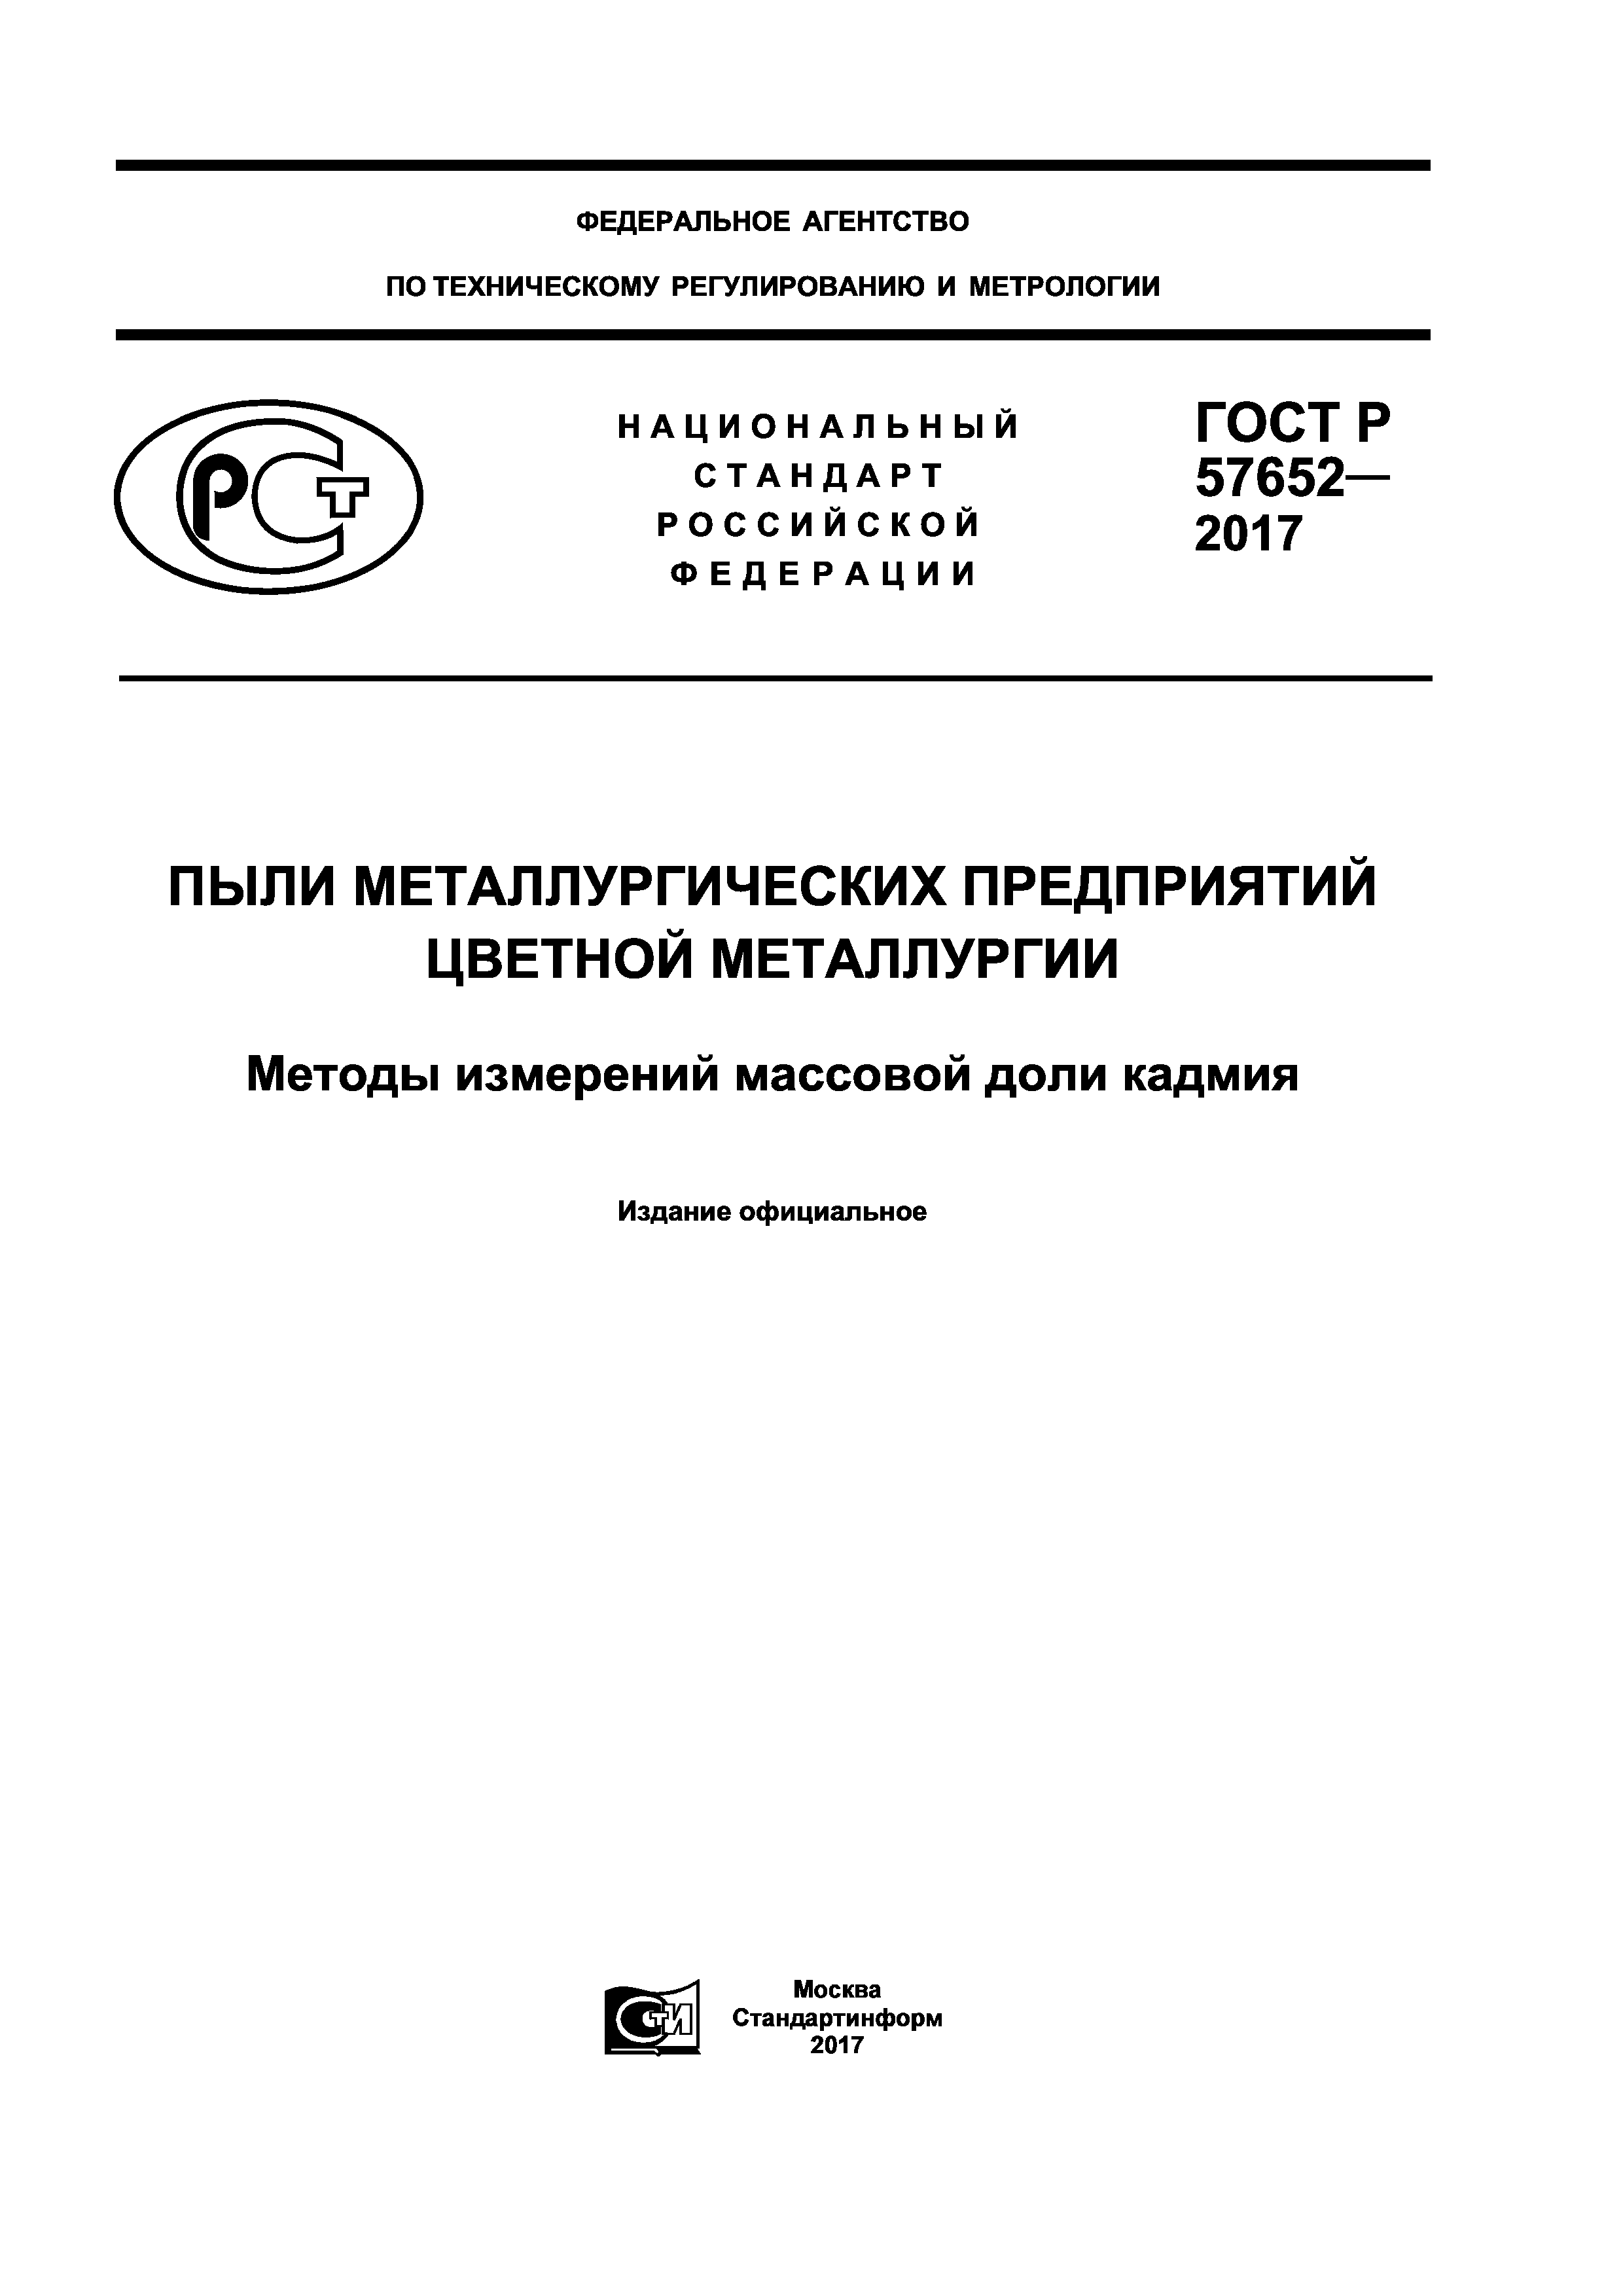 ГОСТ Р 57652-2017